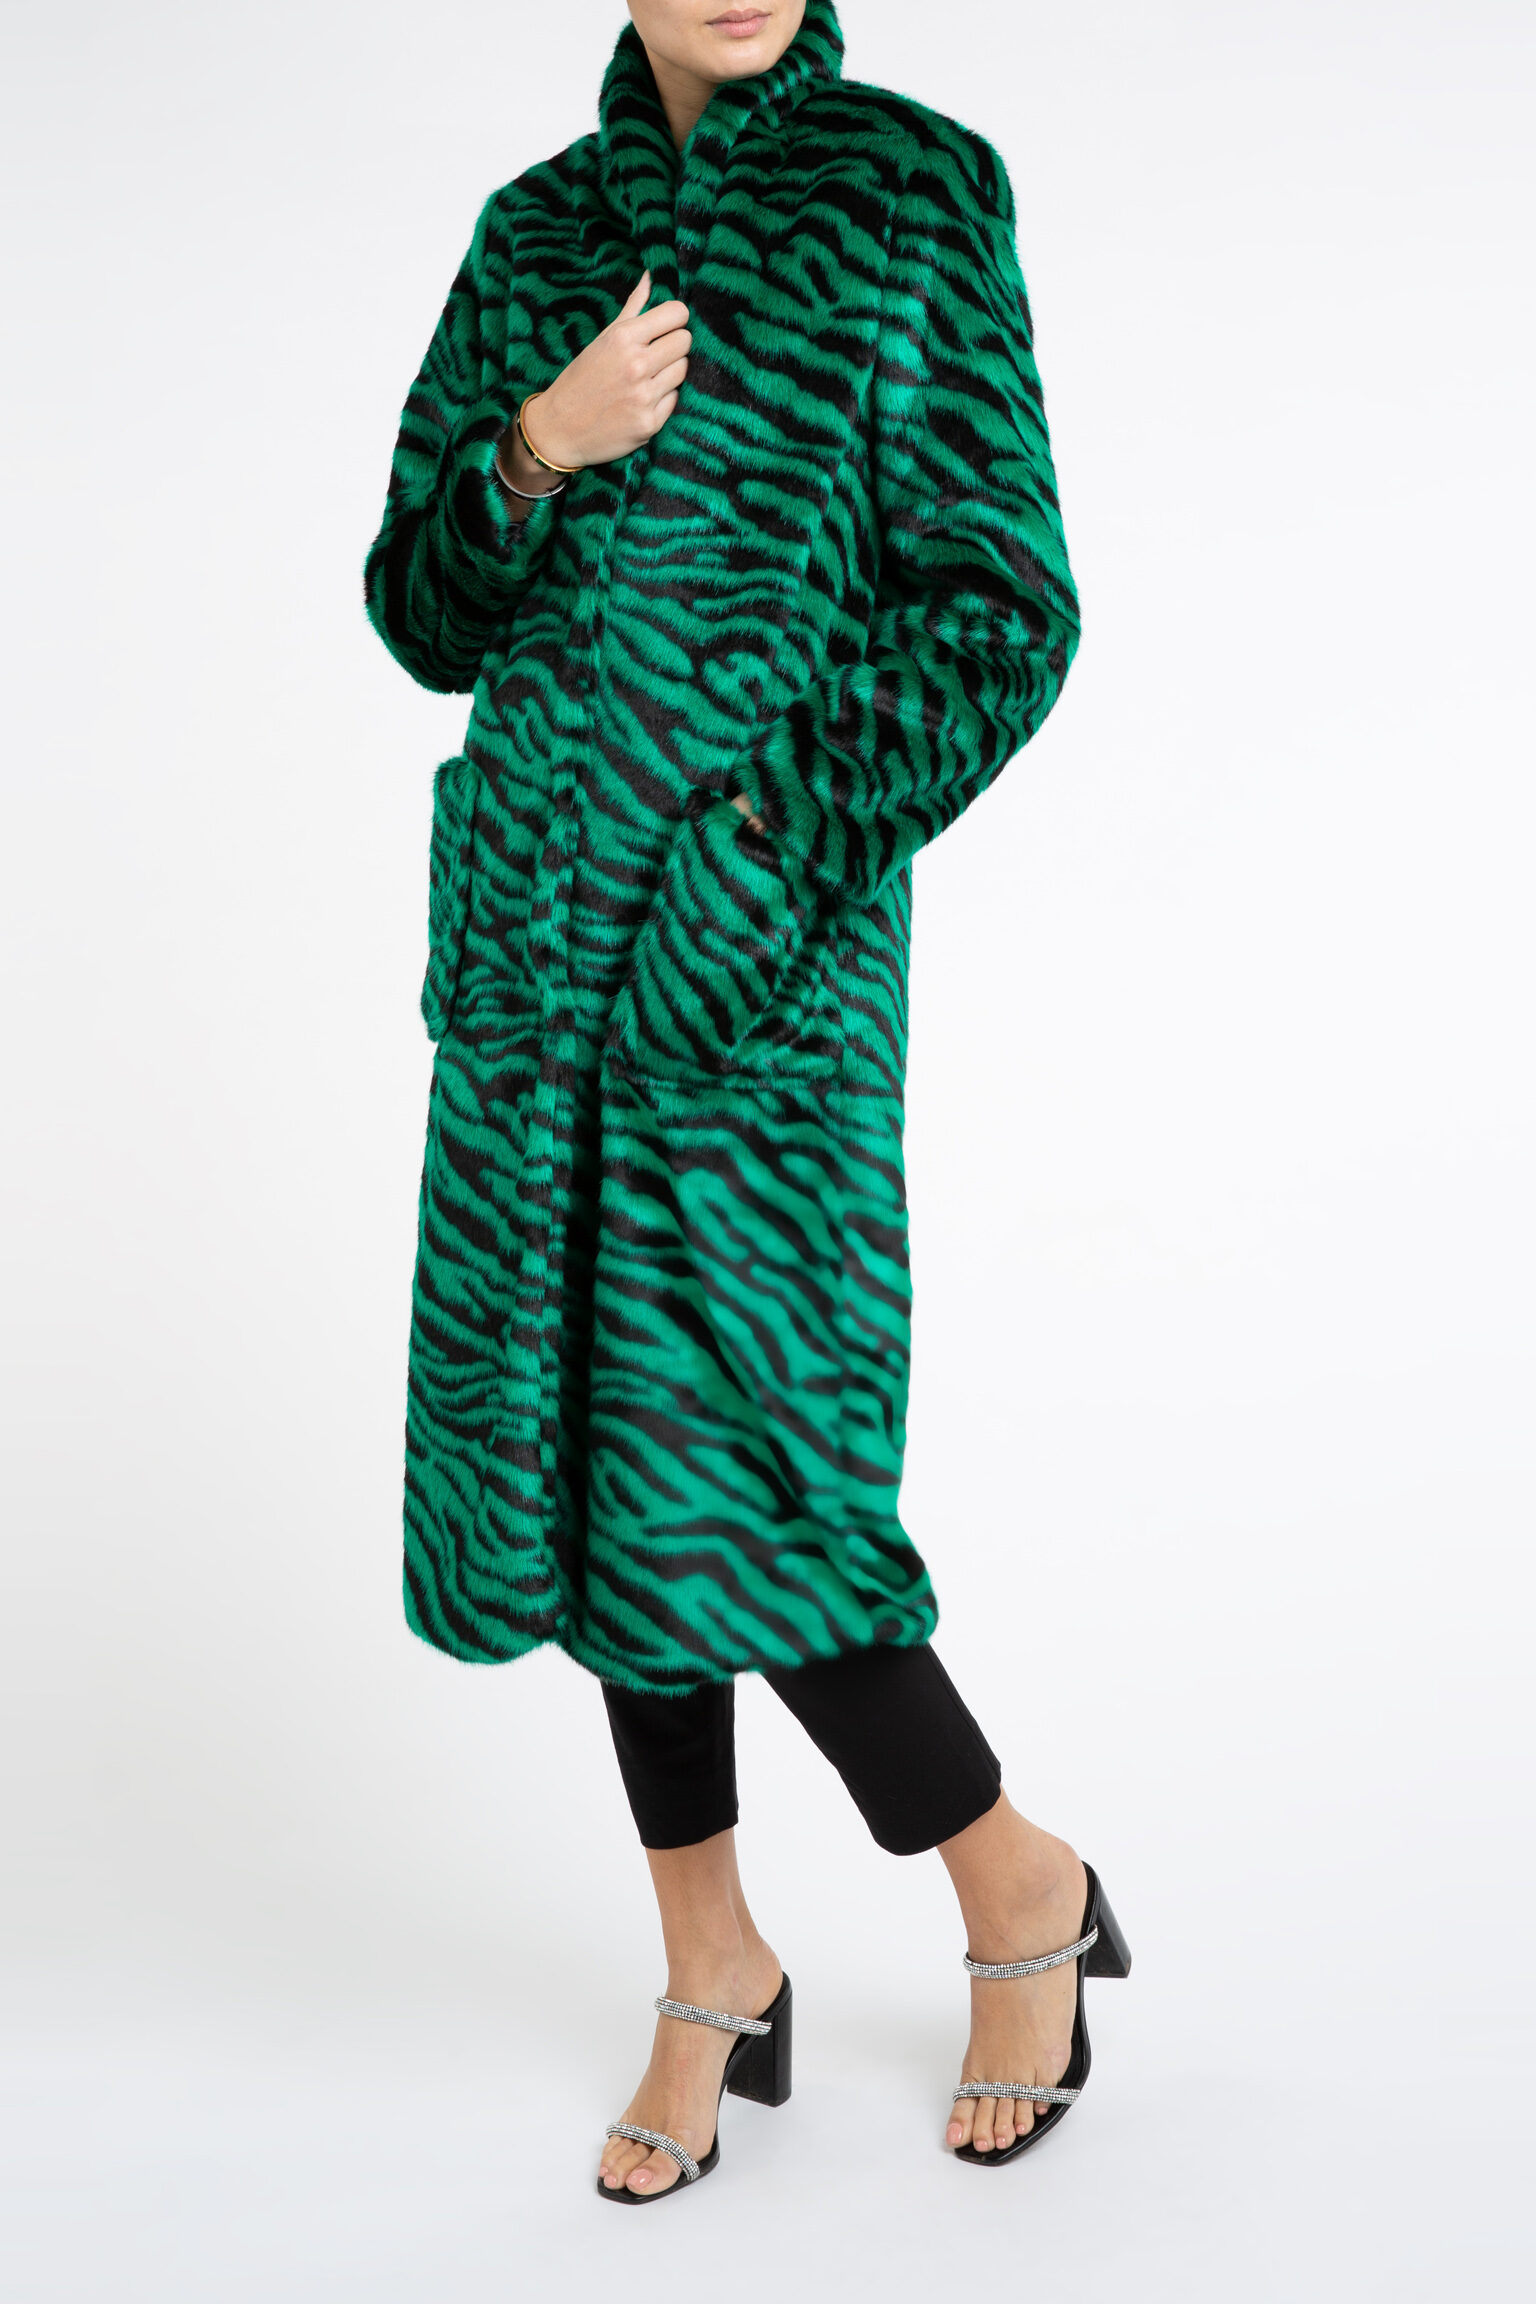 Limited Edition Esmeralda Faux Fur Coat in Green Zebra Print